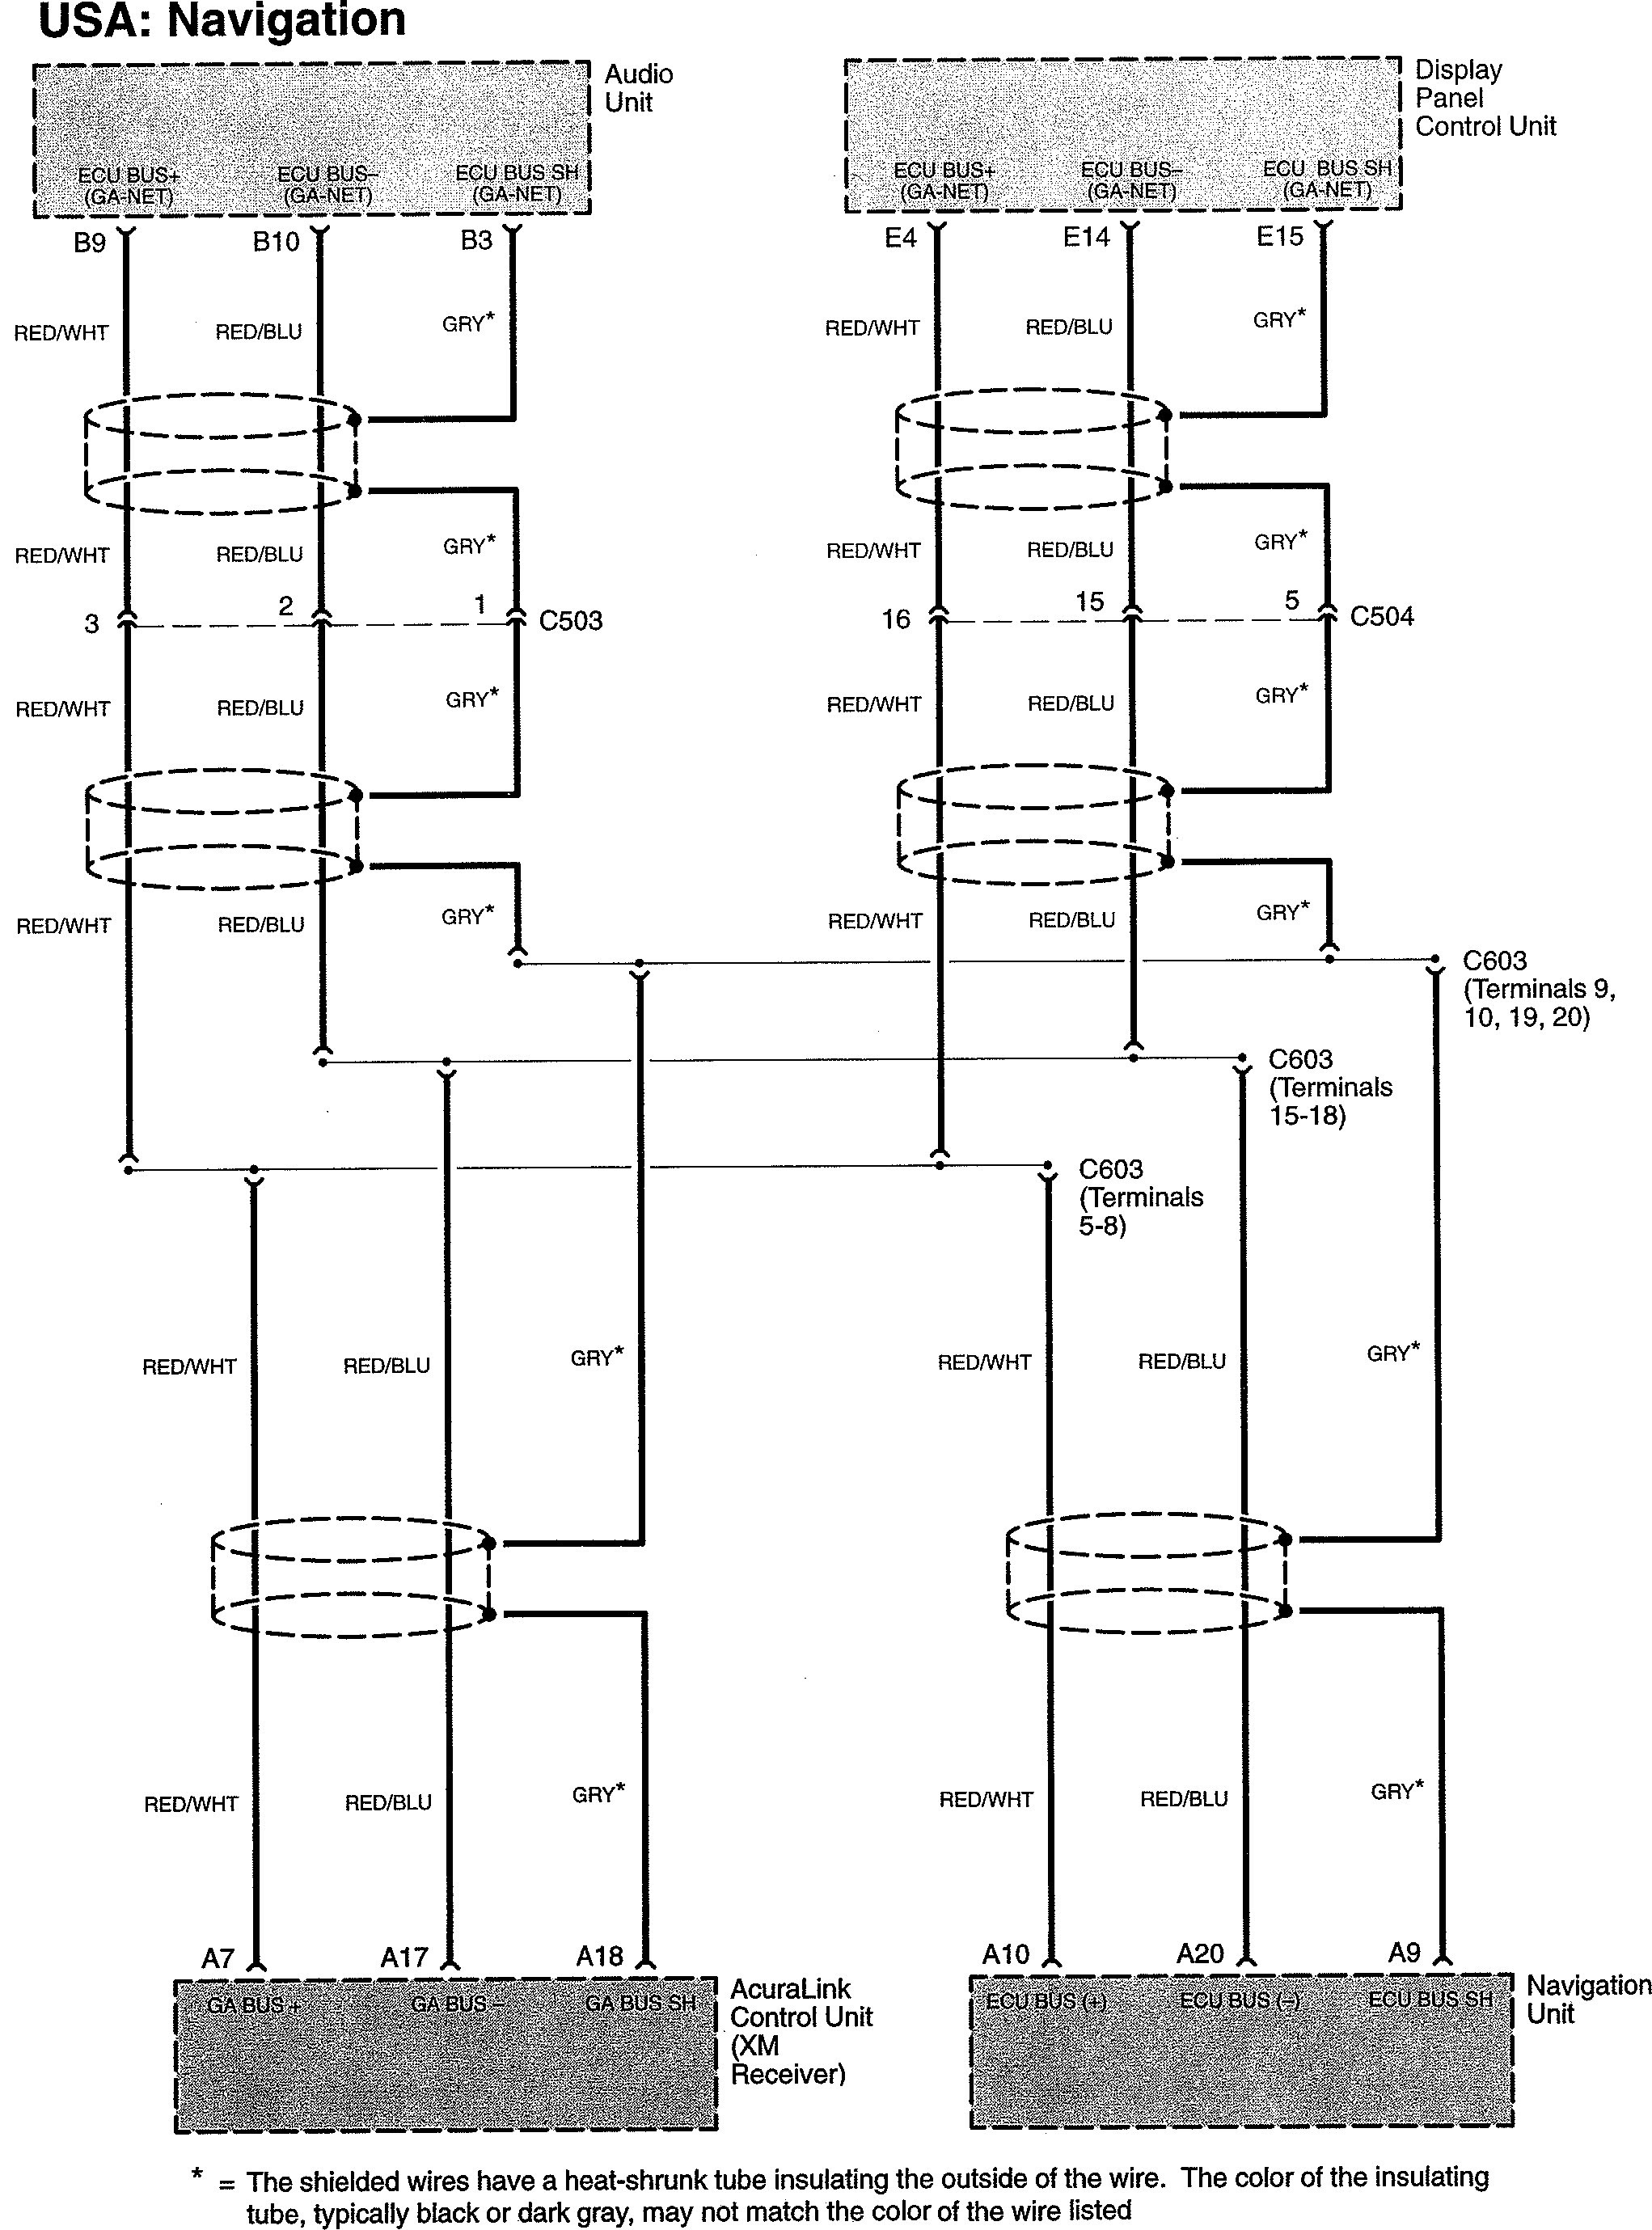 Wiring Diagram PDF: 2003 Acura Tl Stereo Wiring Diagram